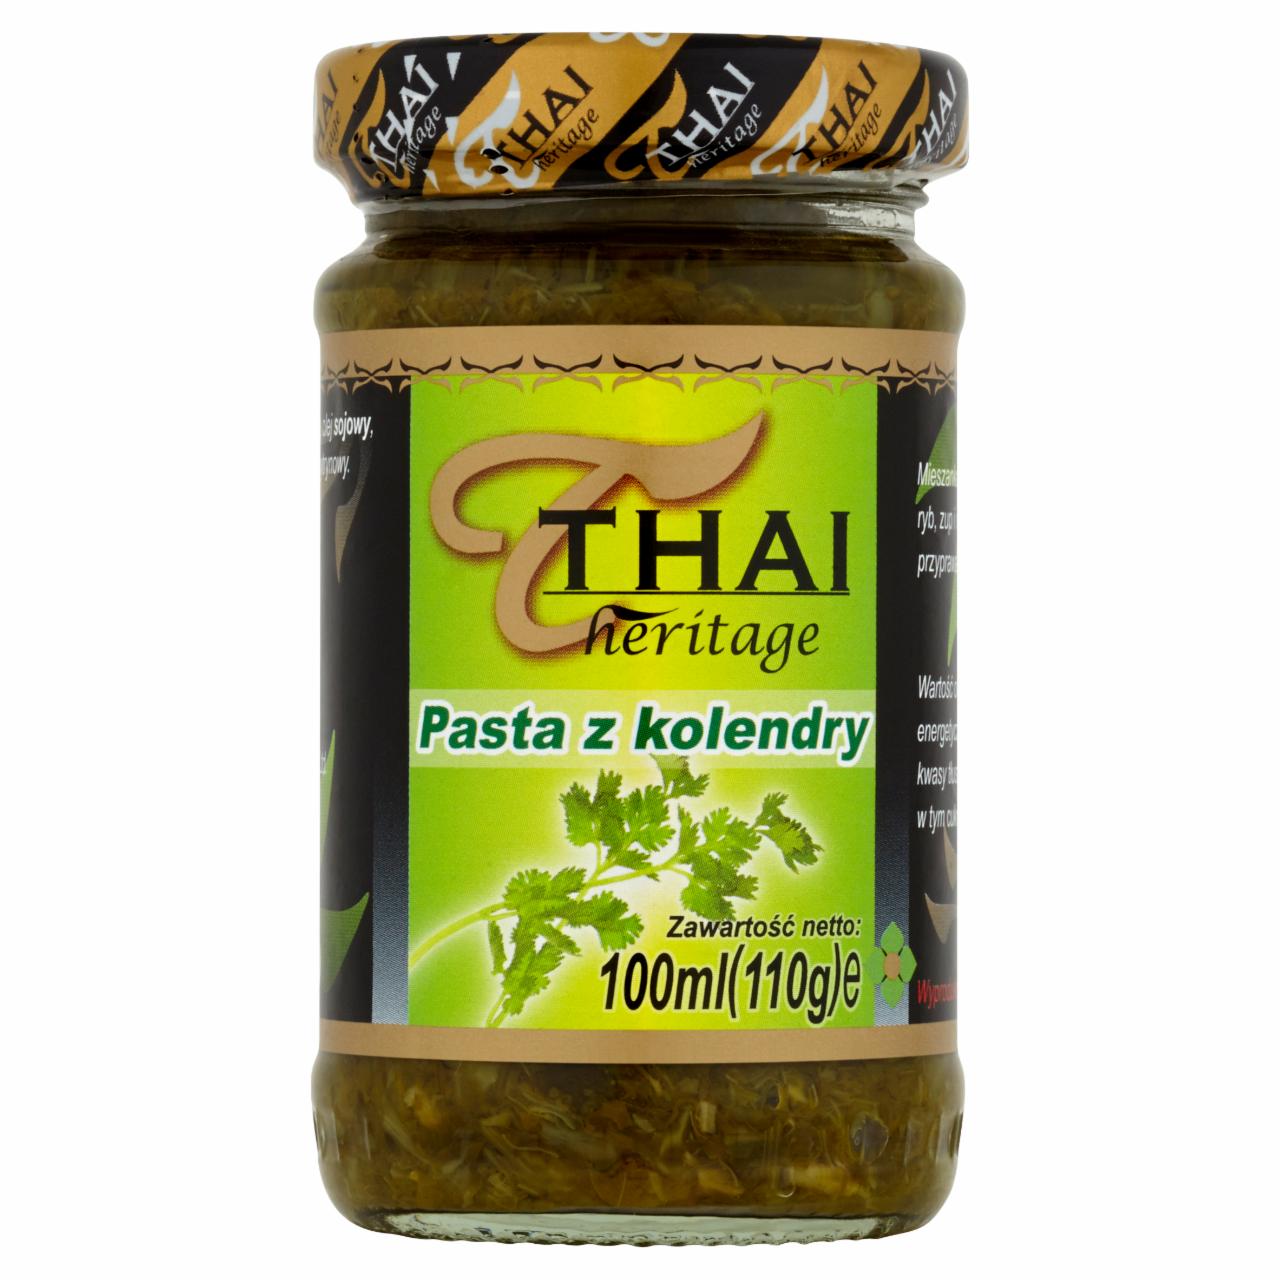 Zdjęcia - Thai Heritage Pasta z kolendry 100 ml